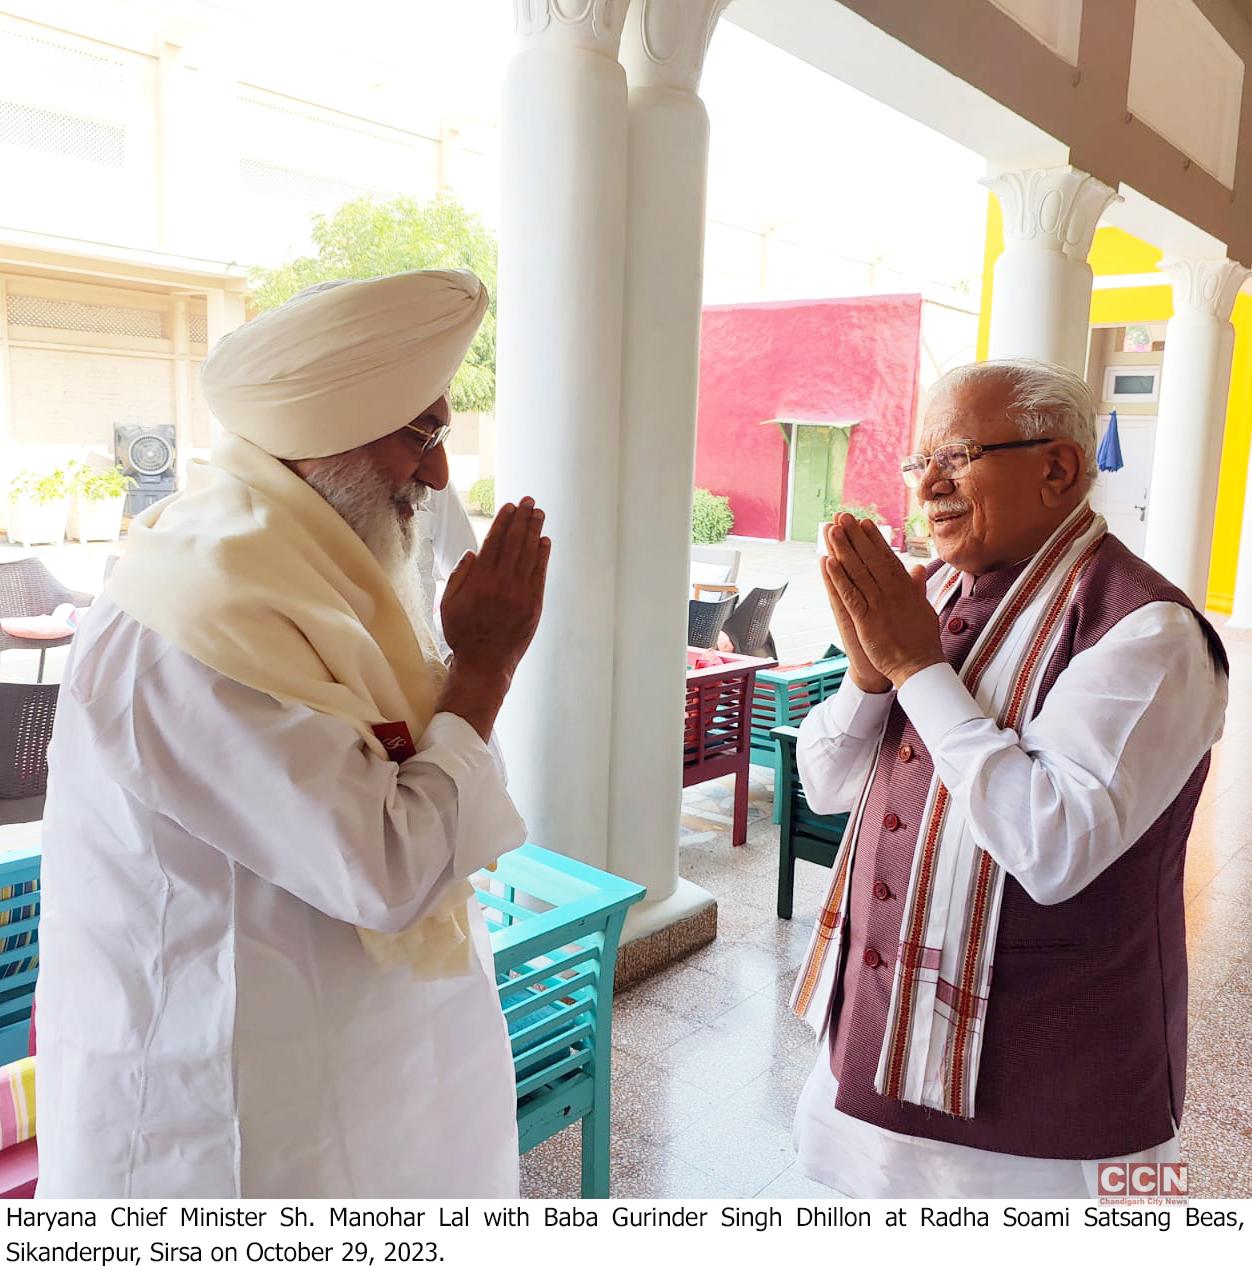 Haryana Chief Minister, Sh. Manohar Lal visited Radha Soami Satsang Beas located in Sikandarpur